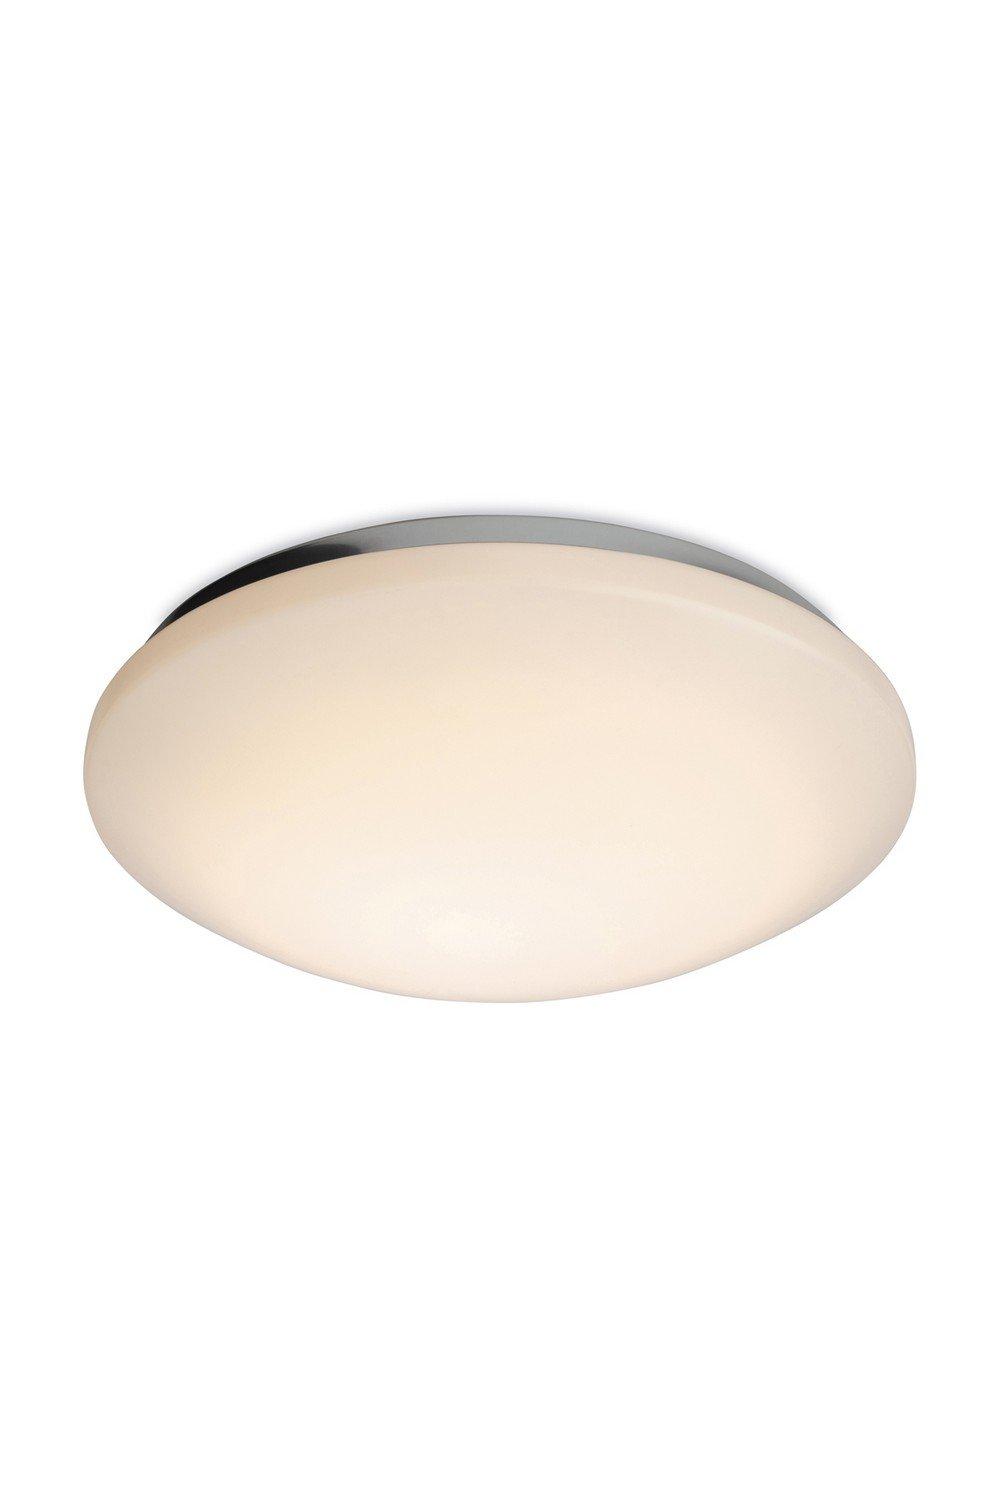 Siena Led Round Flush Bathroom Ceiling Light White Polycarbonate Diffuser Ip44